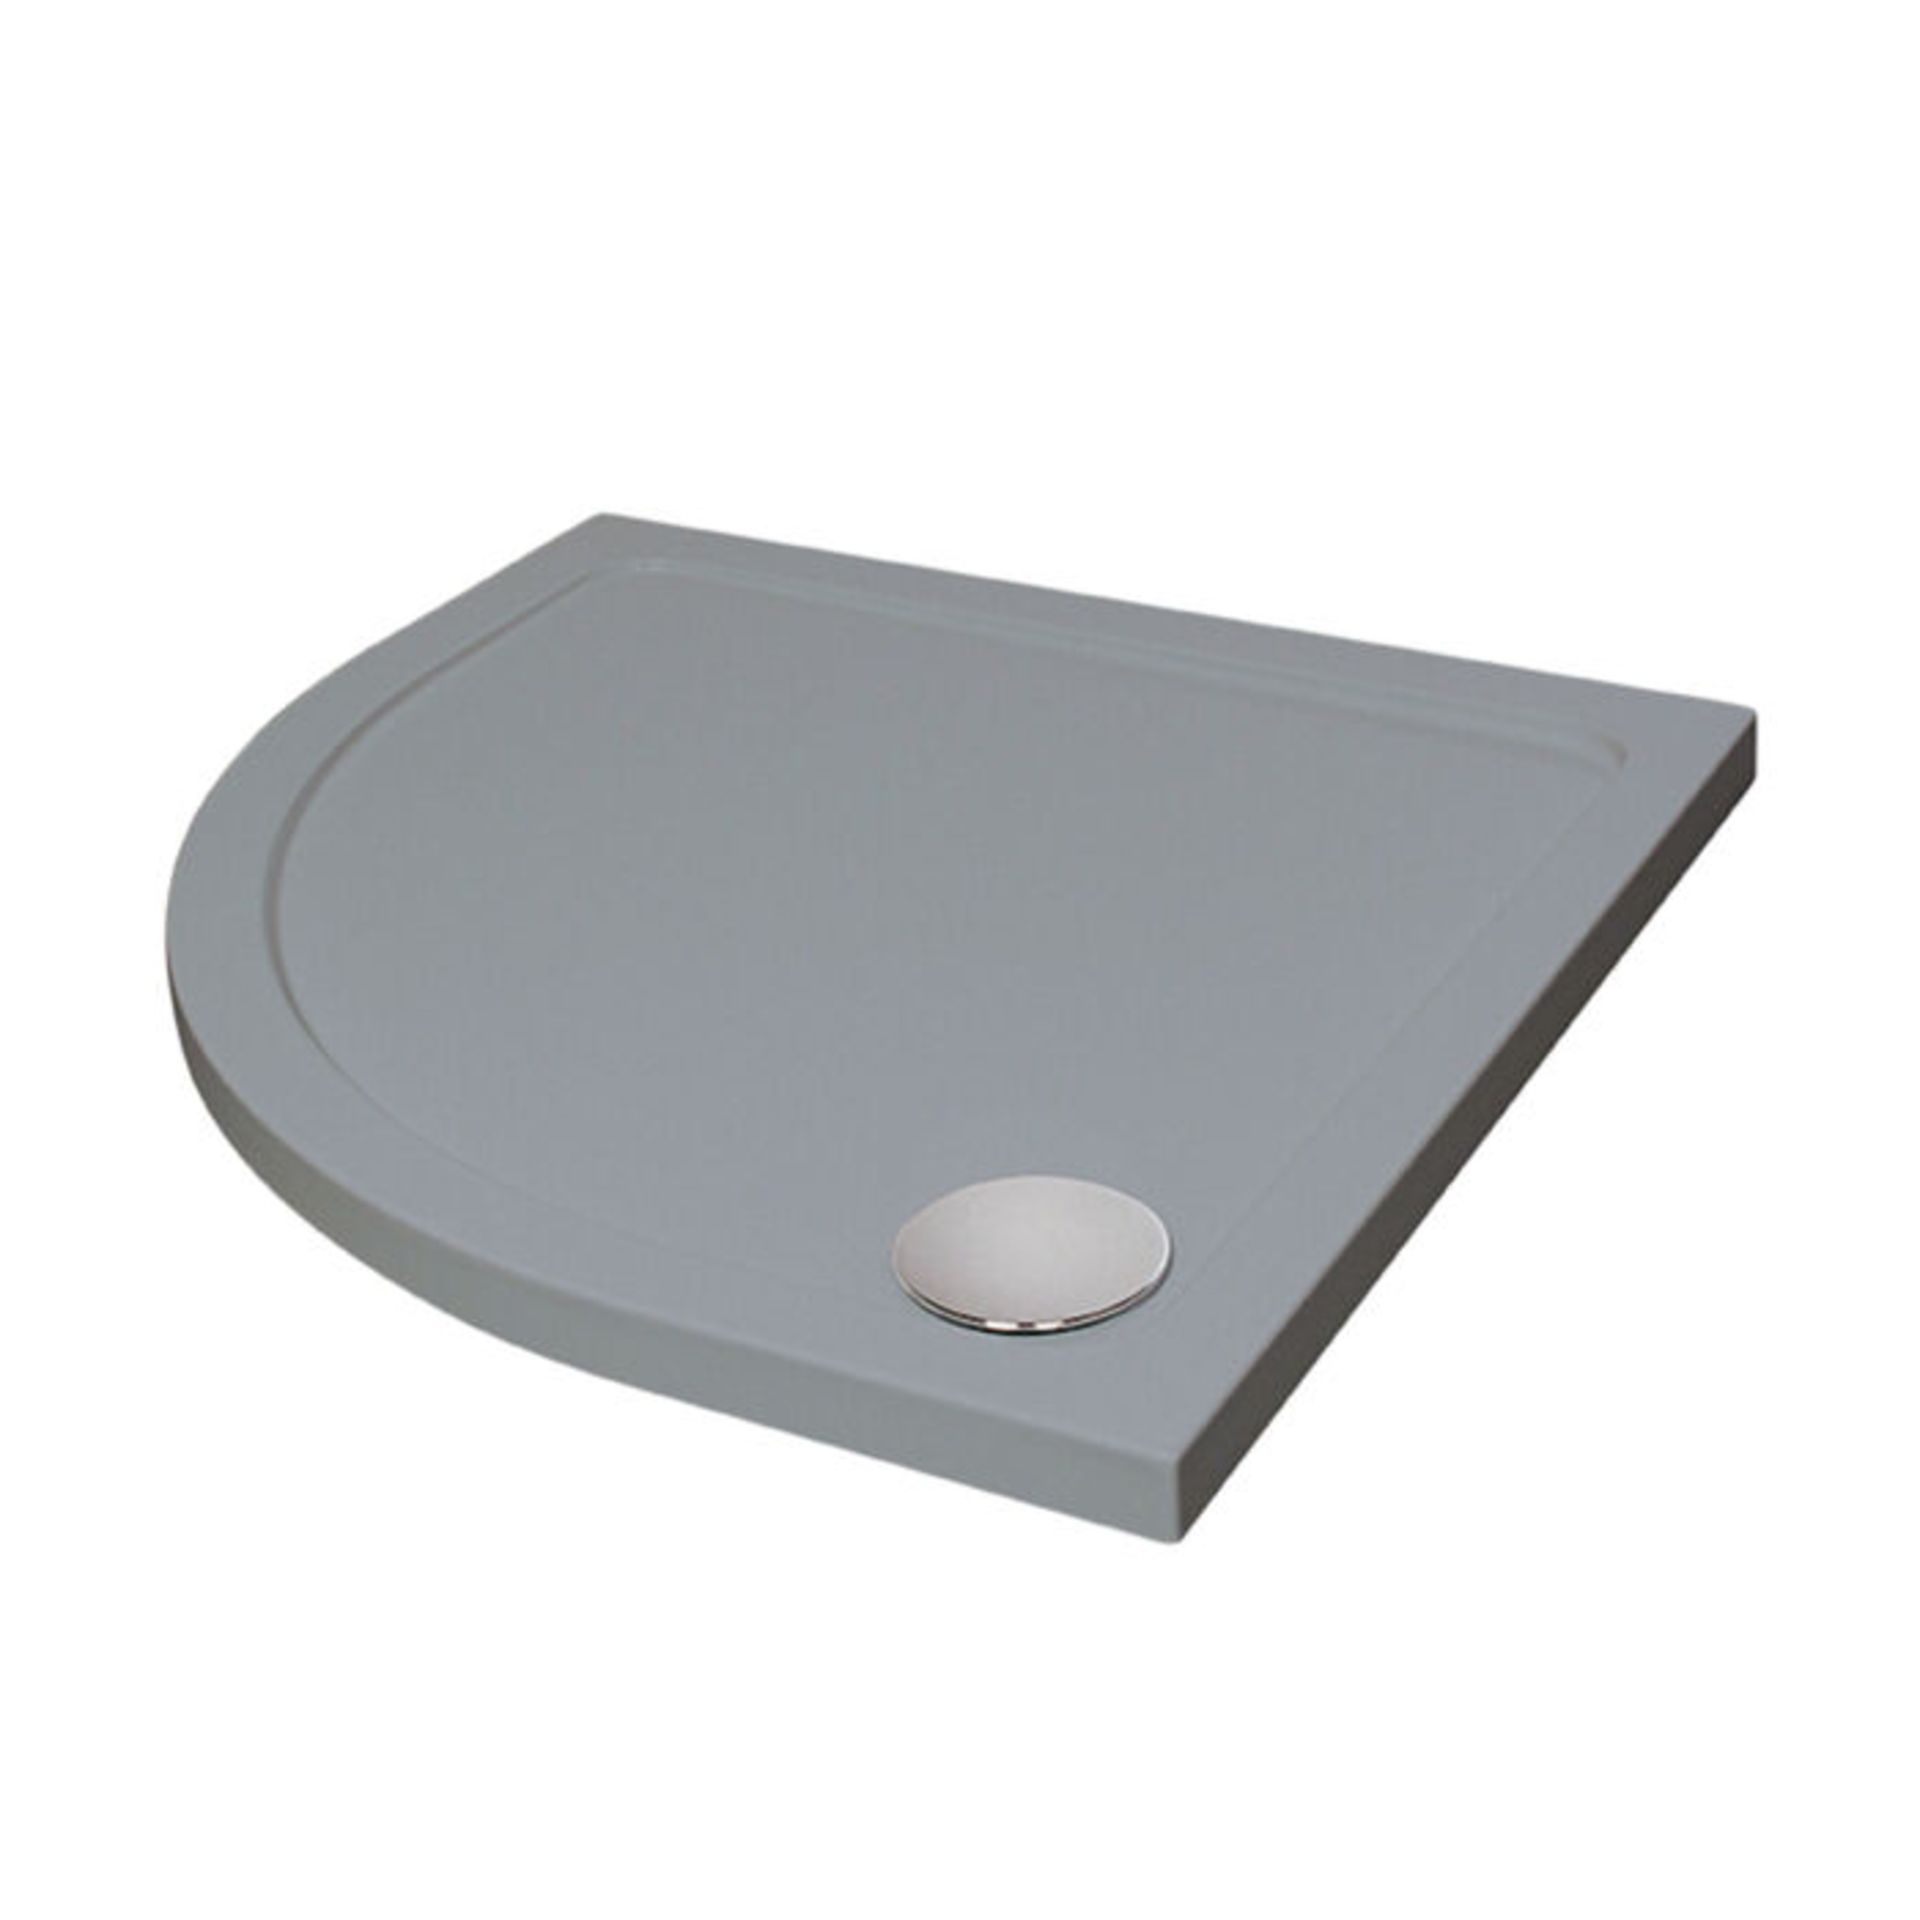 (Z195) 1000 x 800 Shower Tray Right Offset Quadrant - Grey Stone. Low profile ultra slim desi...